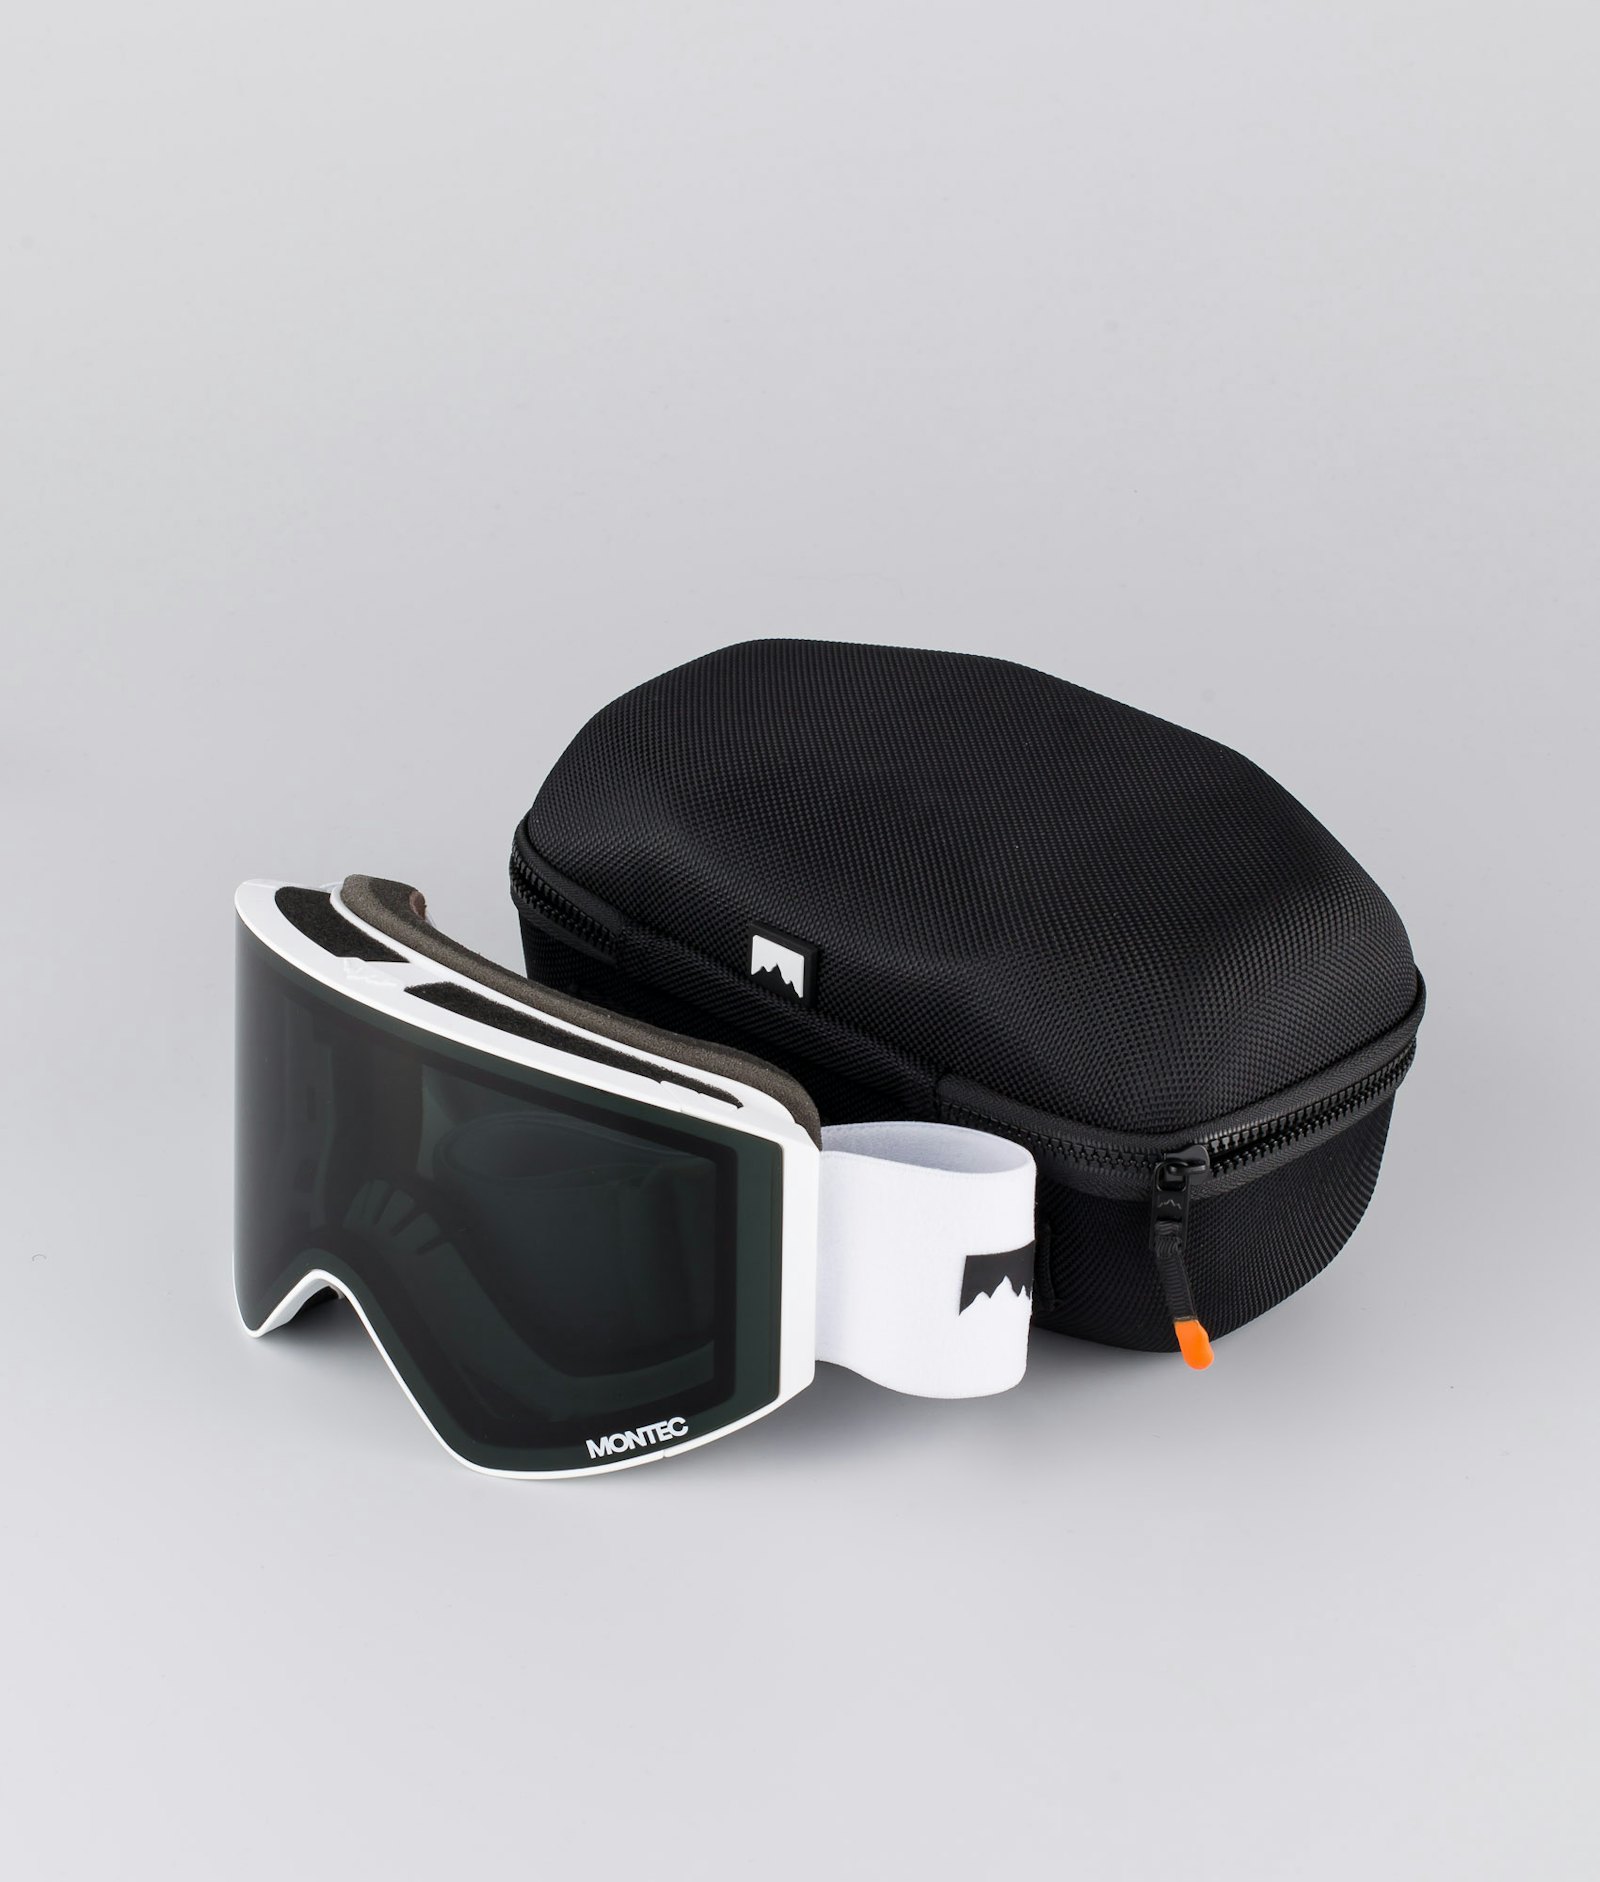 Montec Scope 2020 Medium Ski Goggles White/Black